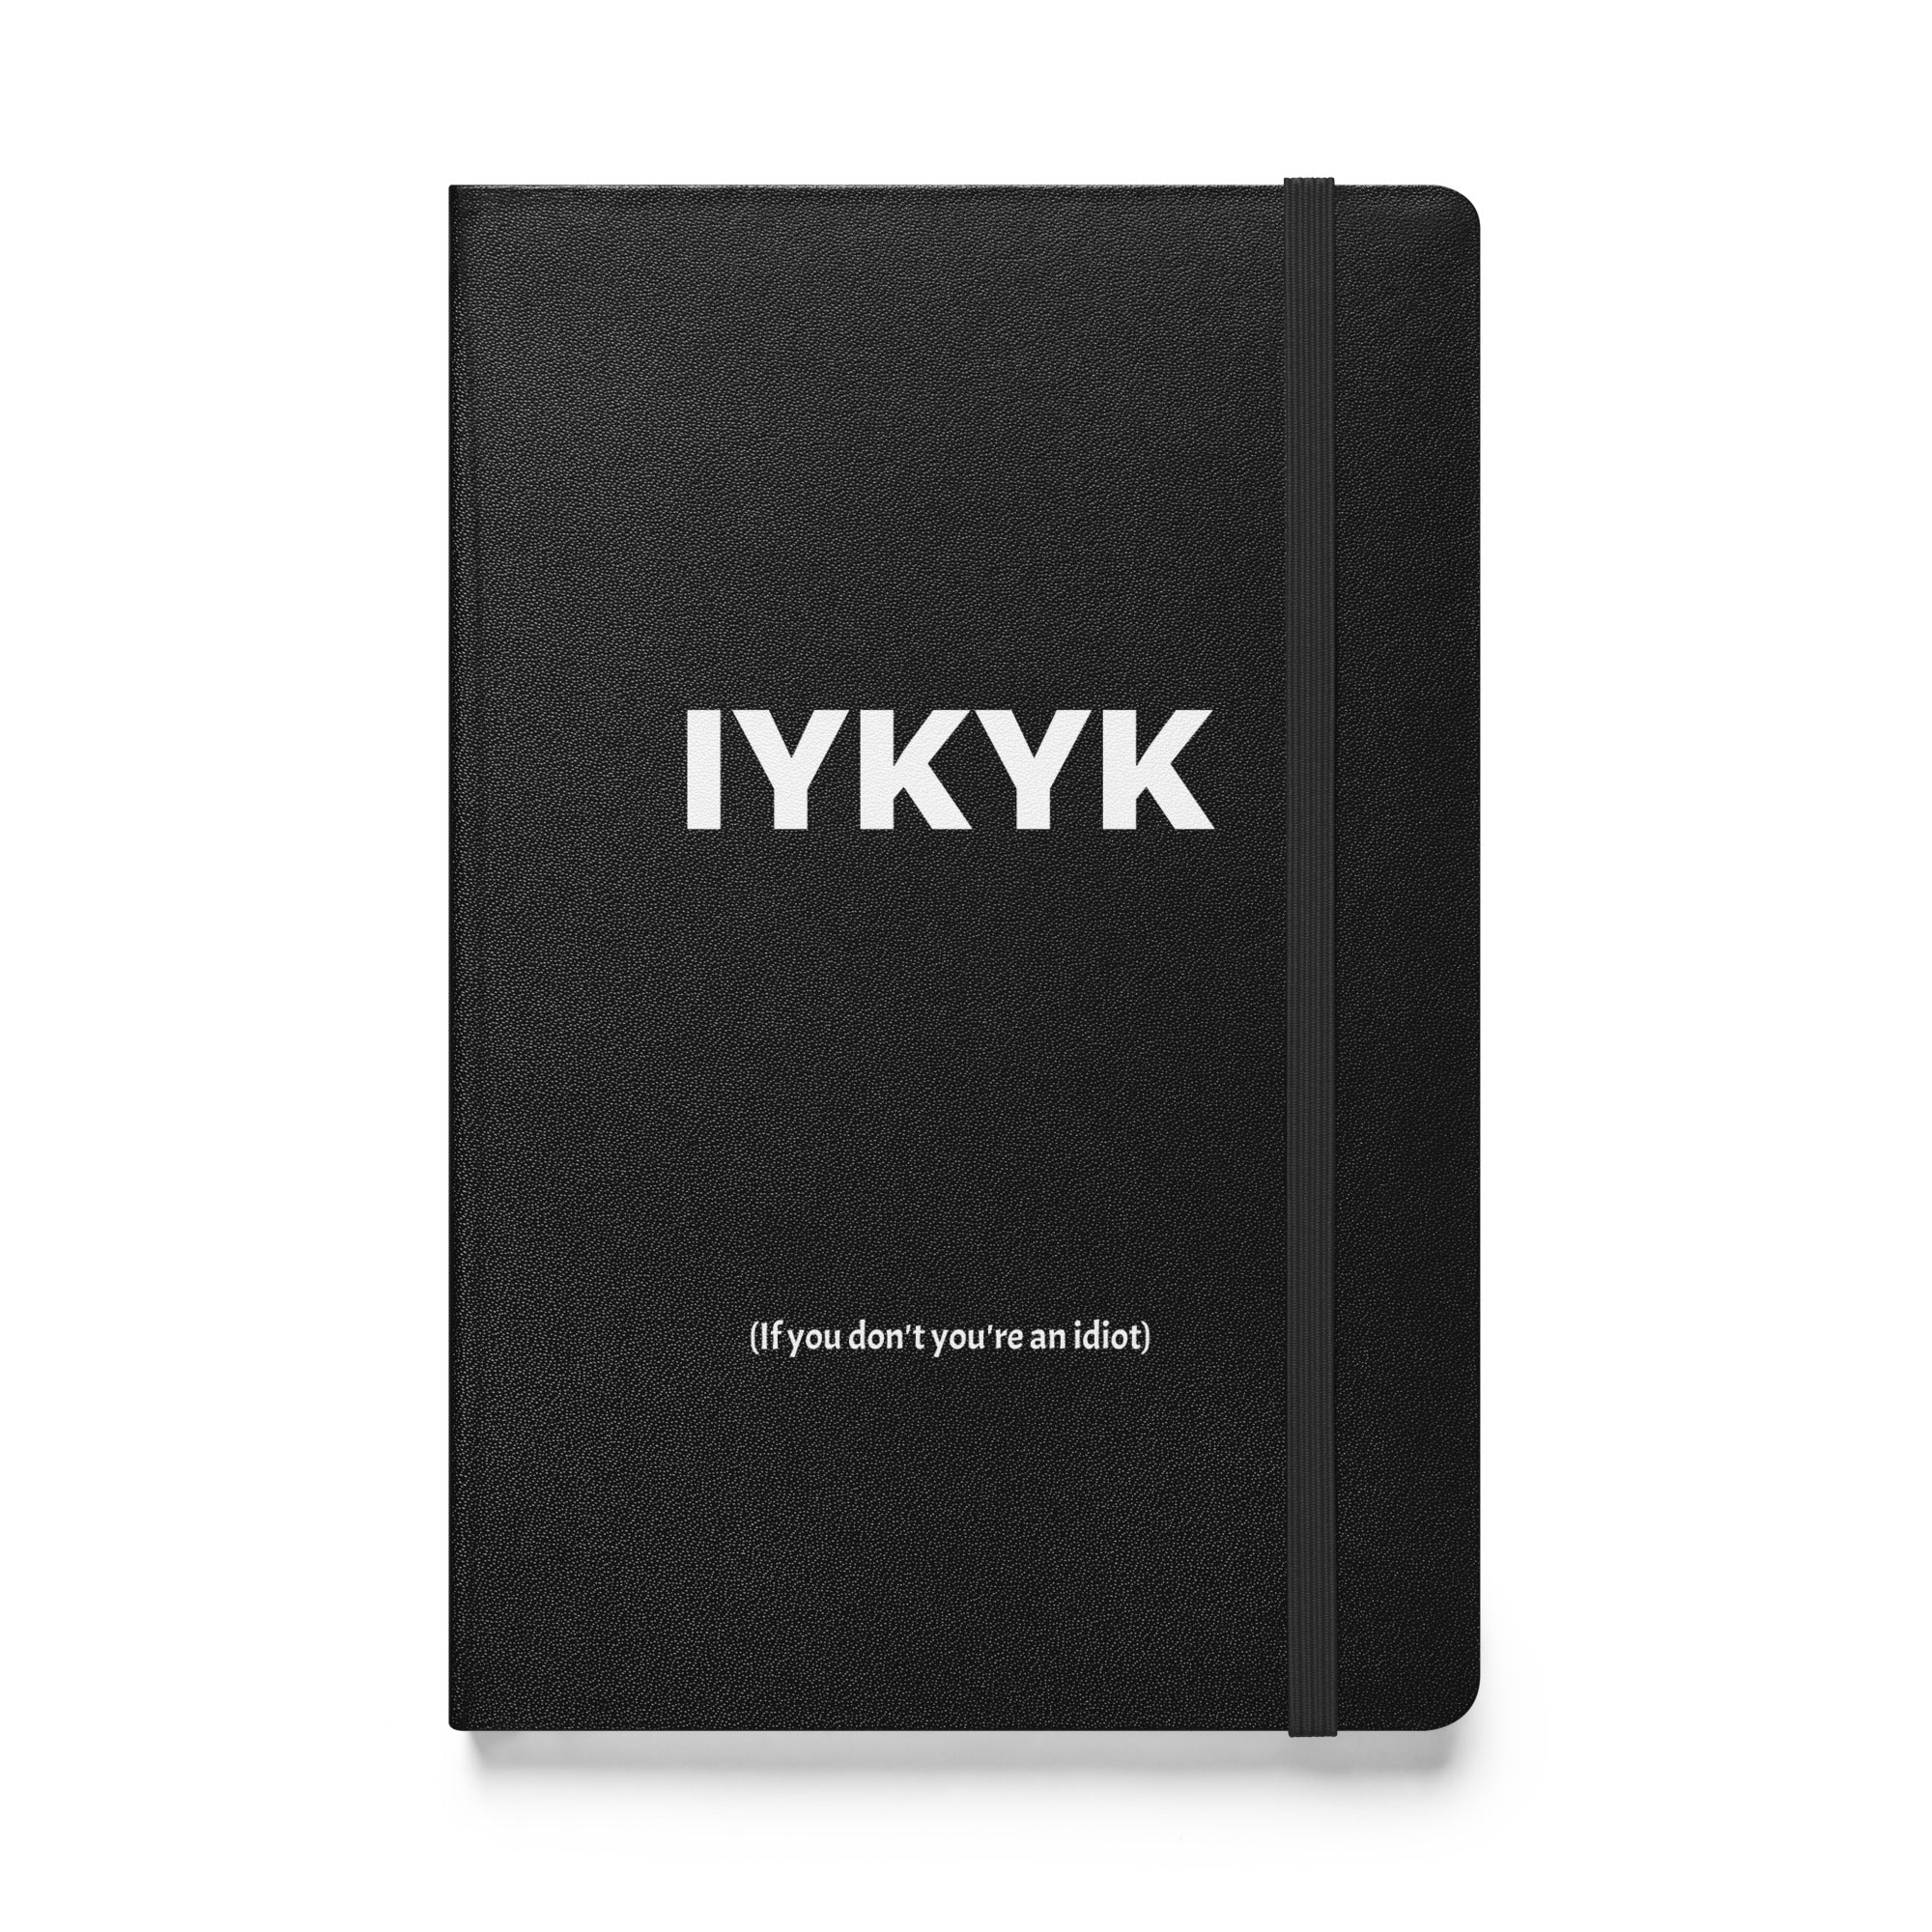 IYKYK Hardcover Notebook Journal